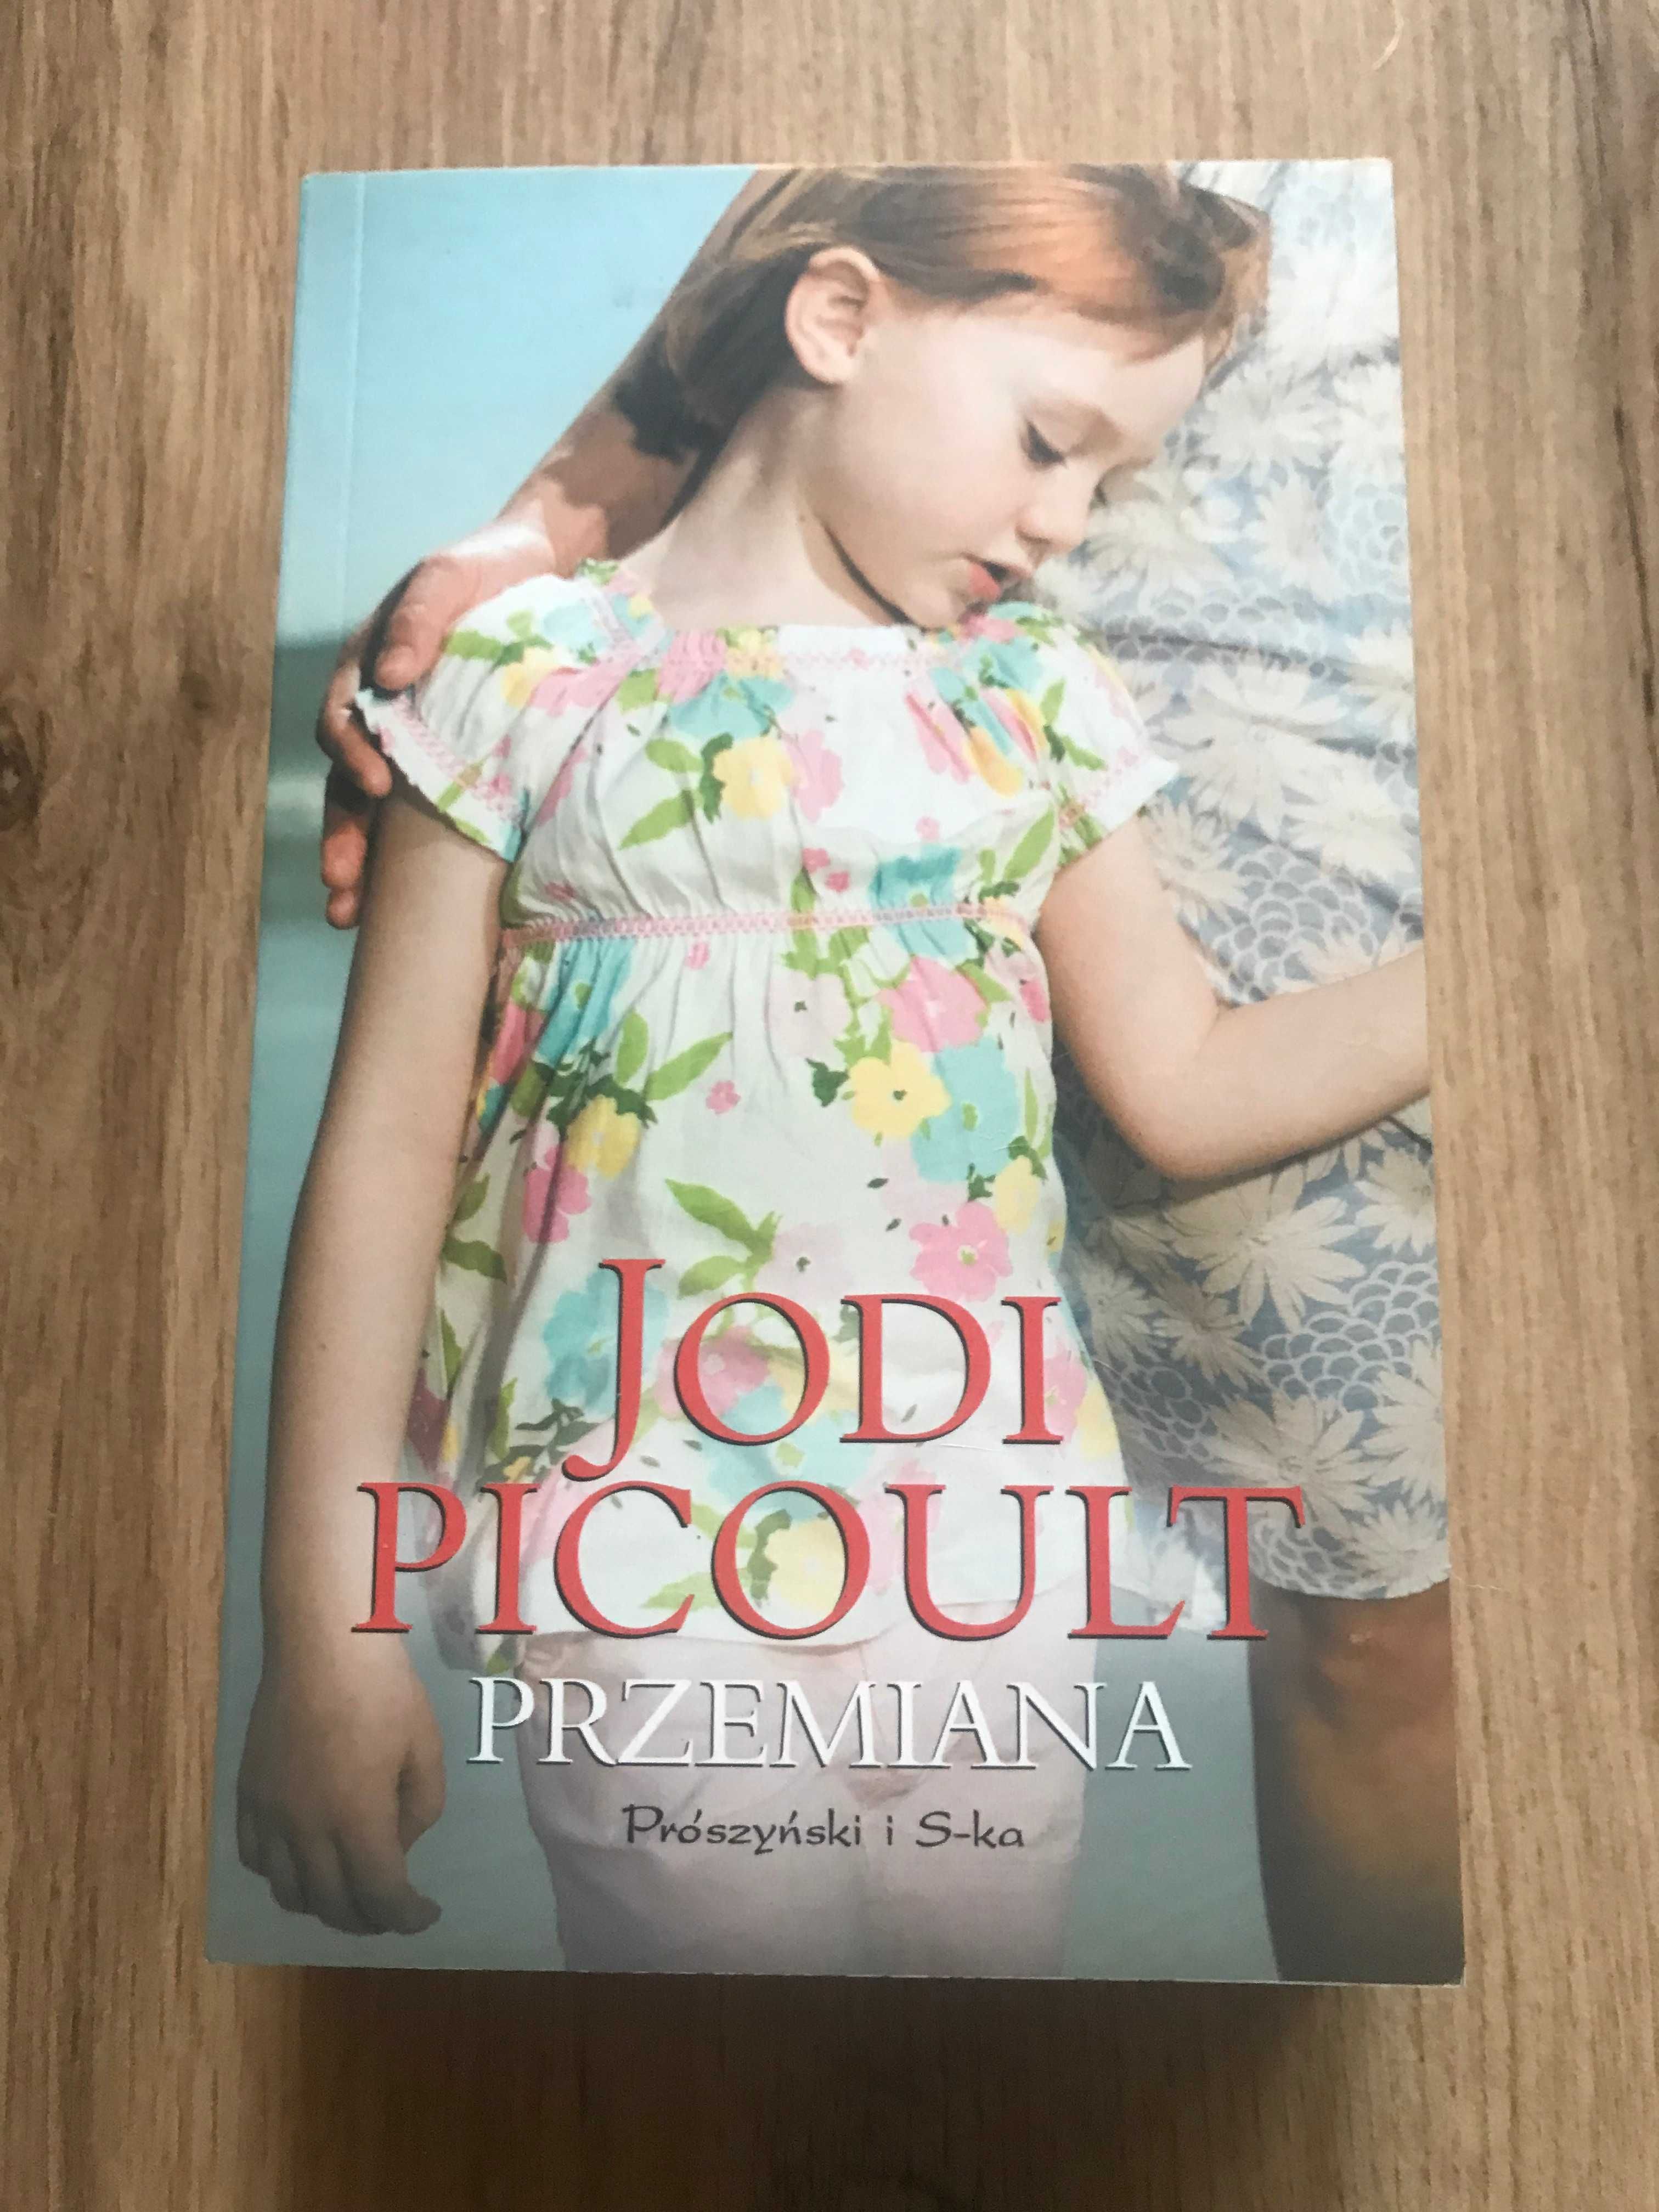 Jodi Picoult (pięć książek)